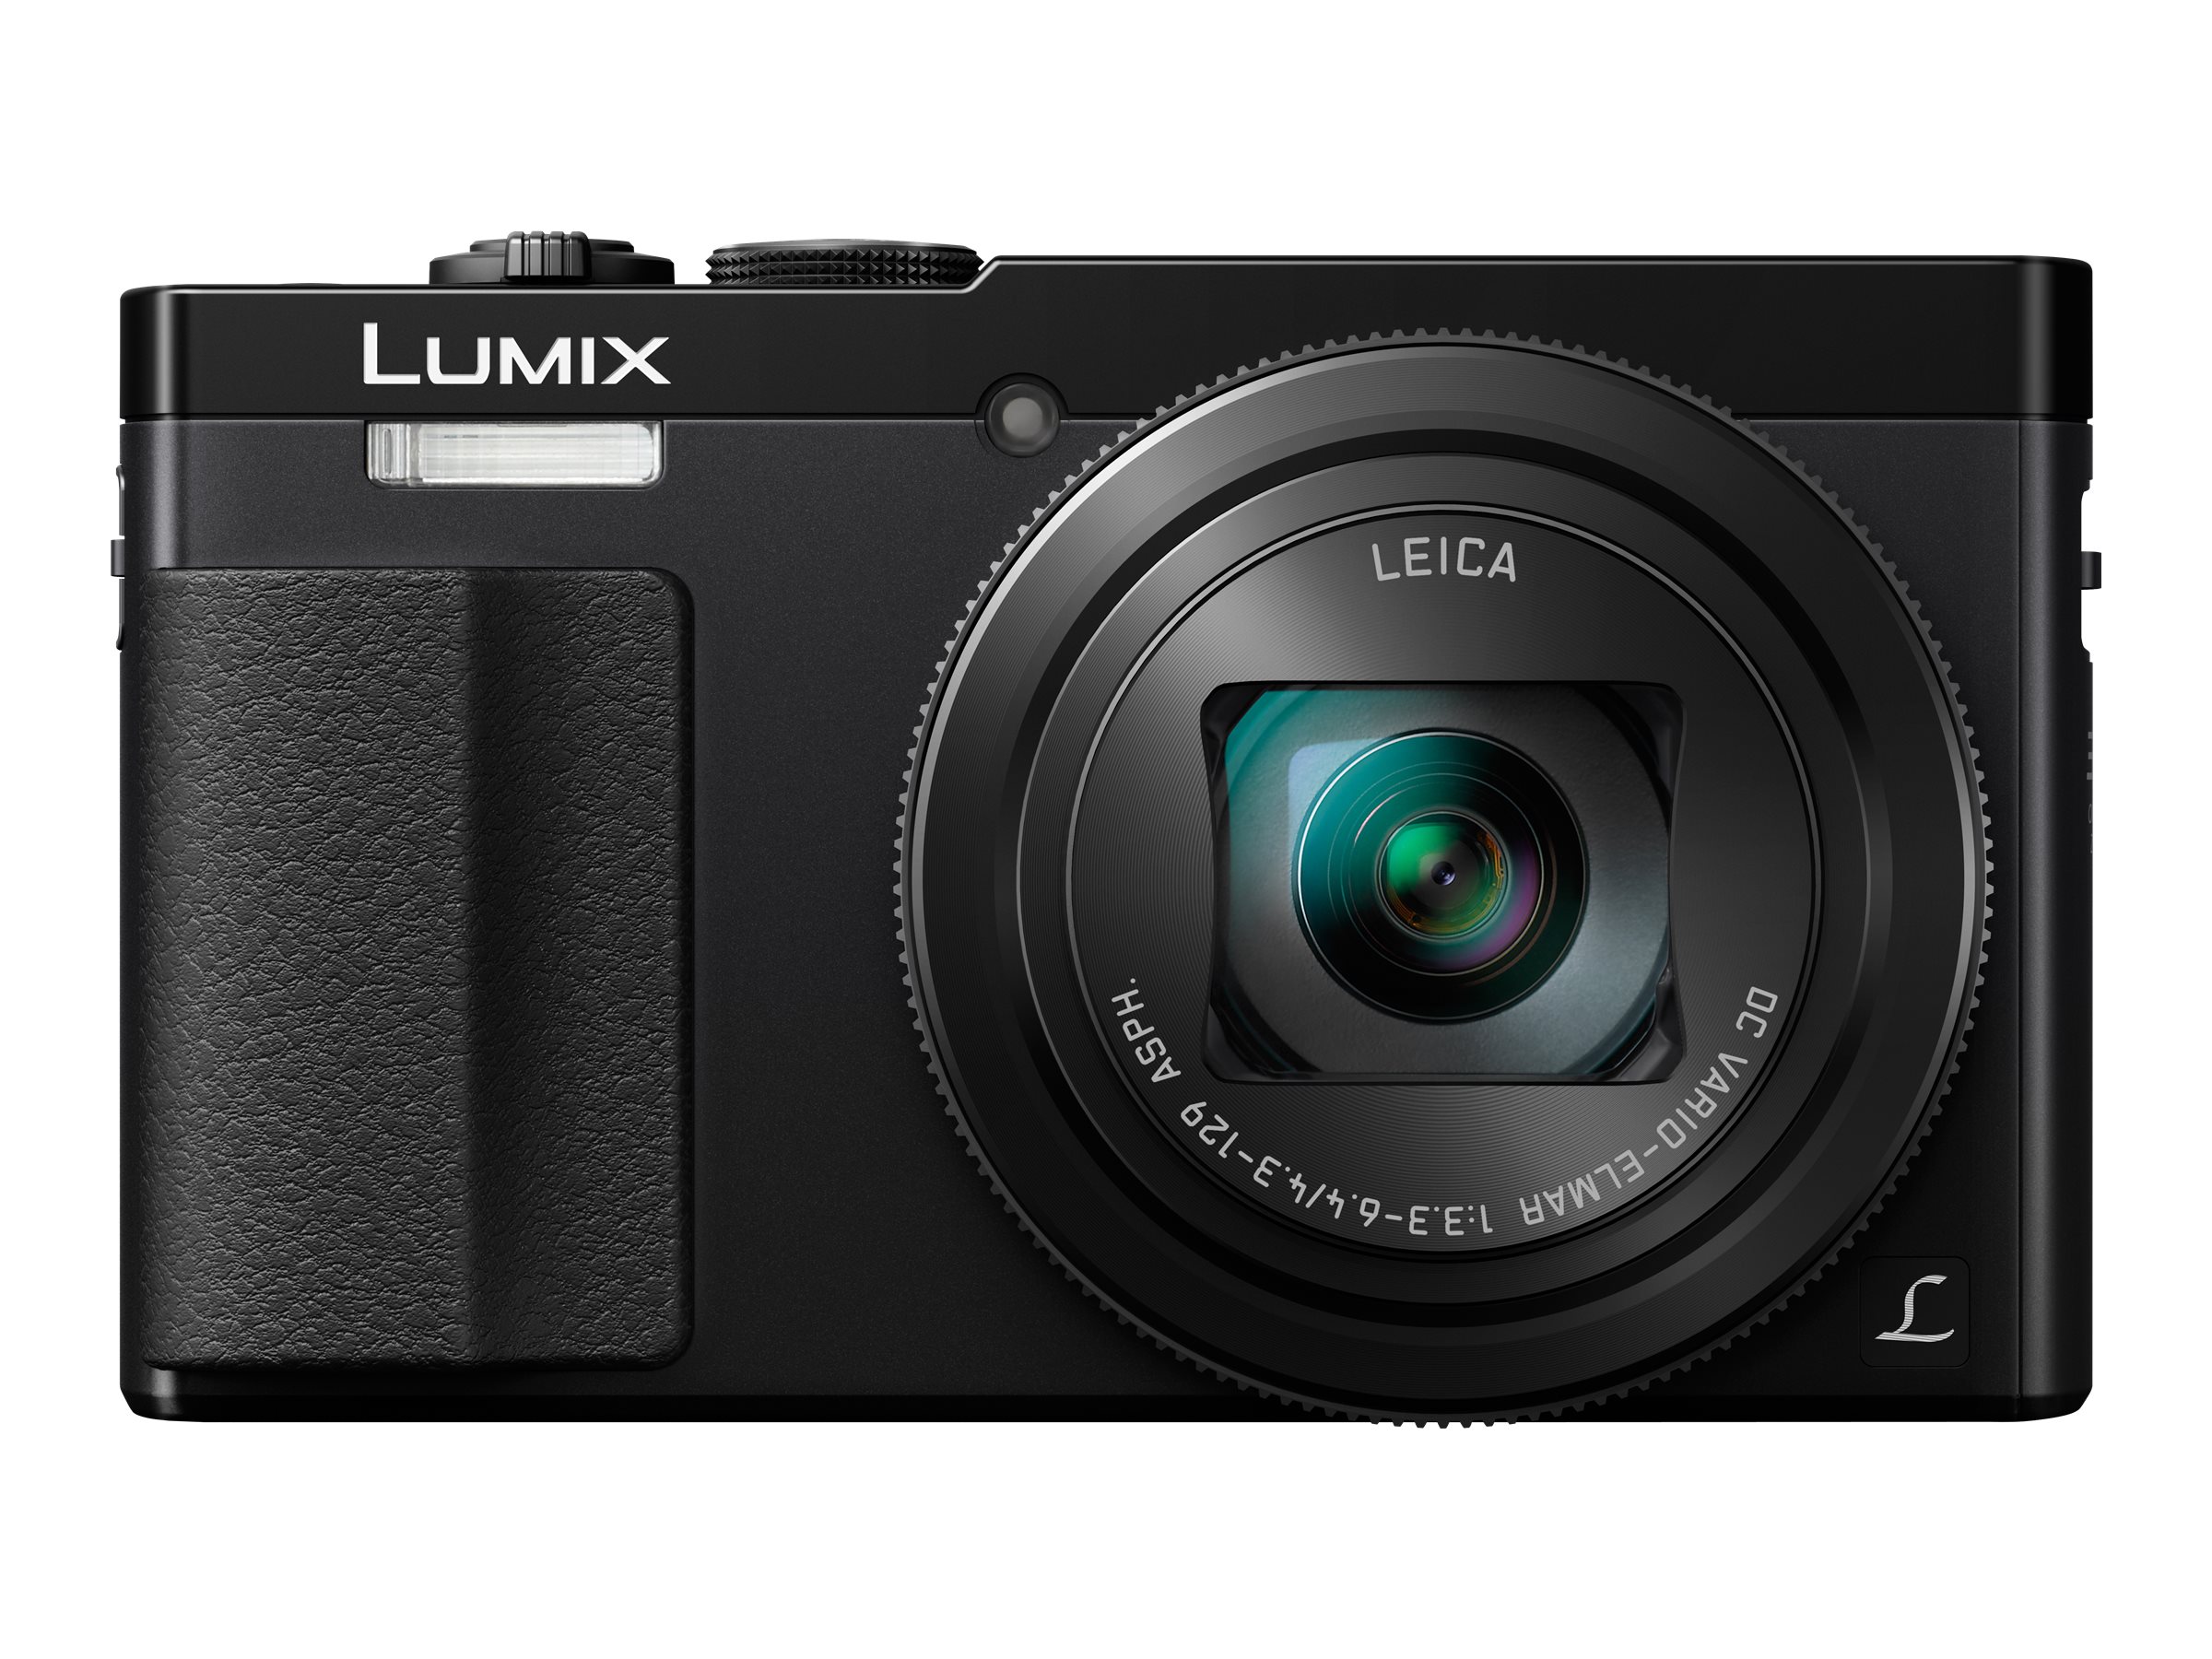 Panasonic Lumix DMC-ZS50 - Digital camera - compact - 12.1 MP - 1080p - 30x optical zoom - Leica - Wi-Fi, NFC - black - image 4 of 10